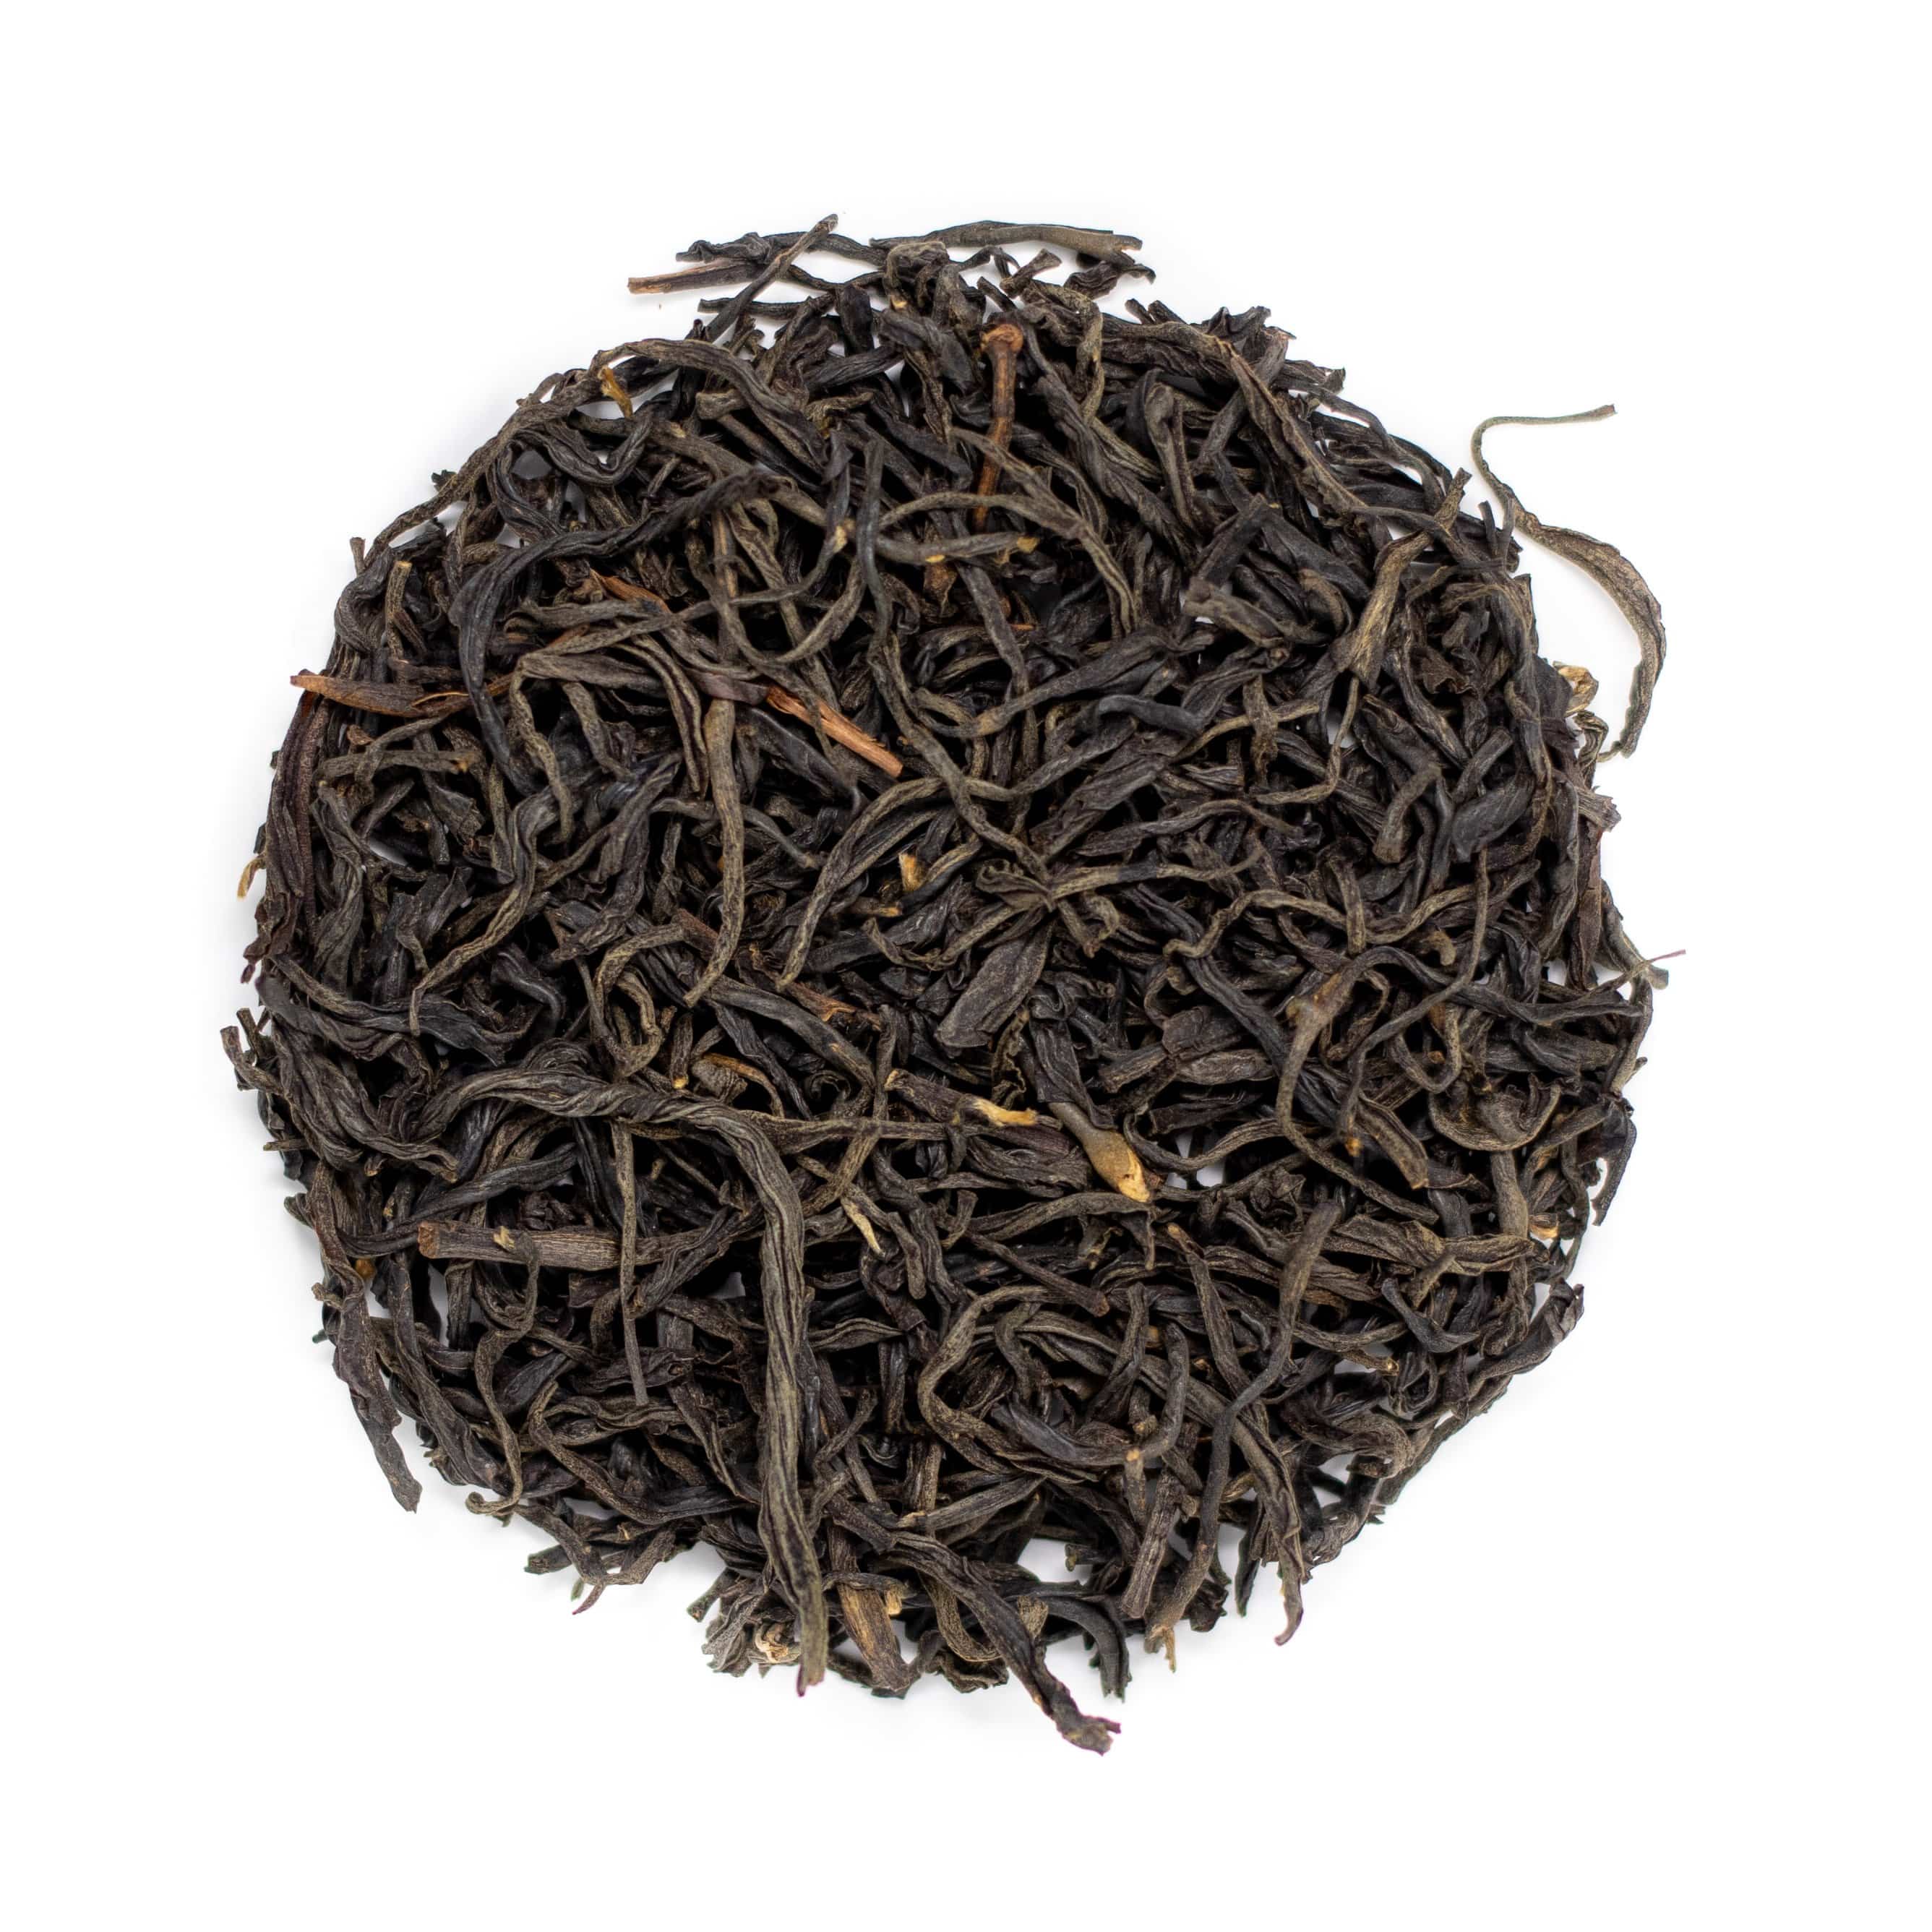 Chado Tea Loose Leaf Colombian Organic Black Tea Wiry